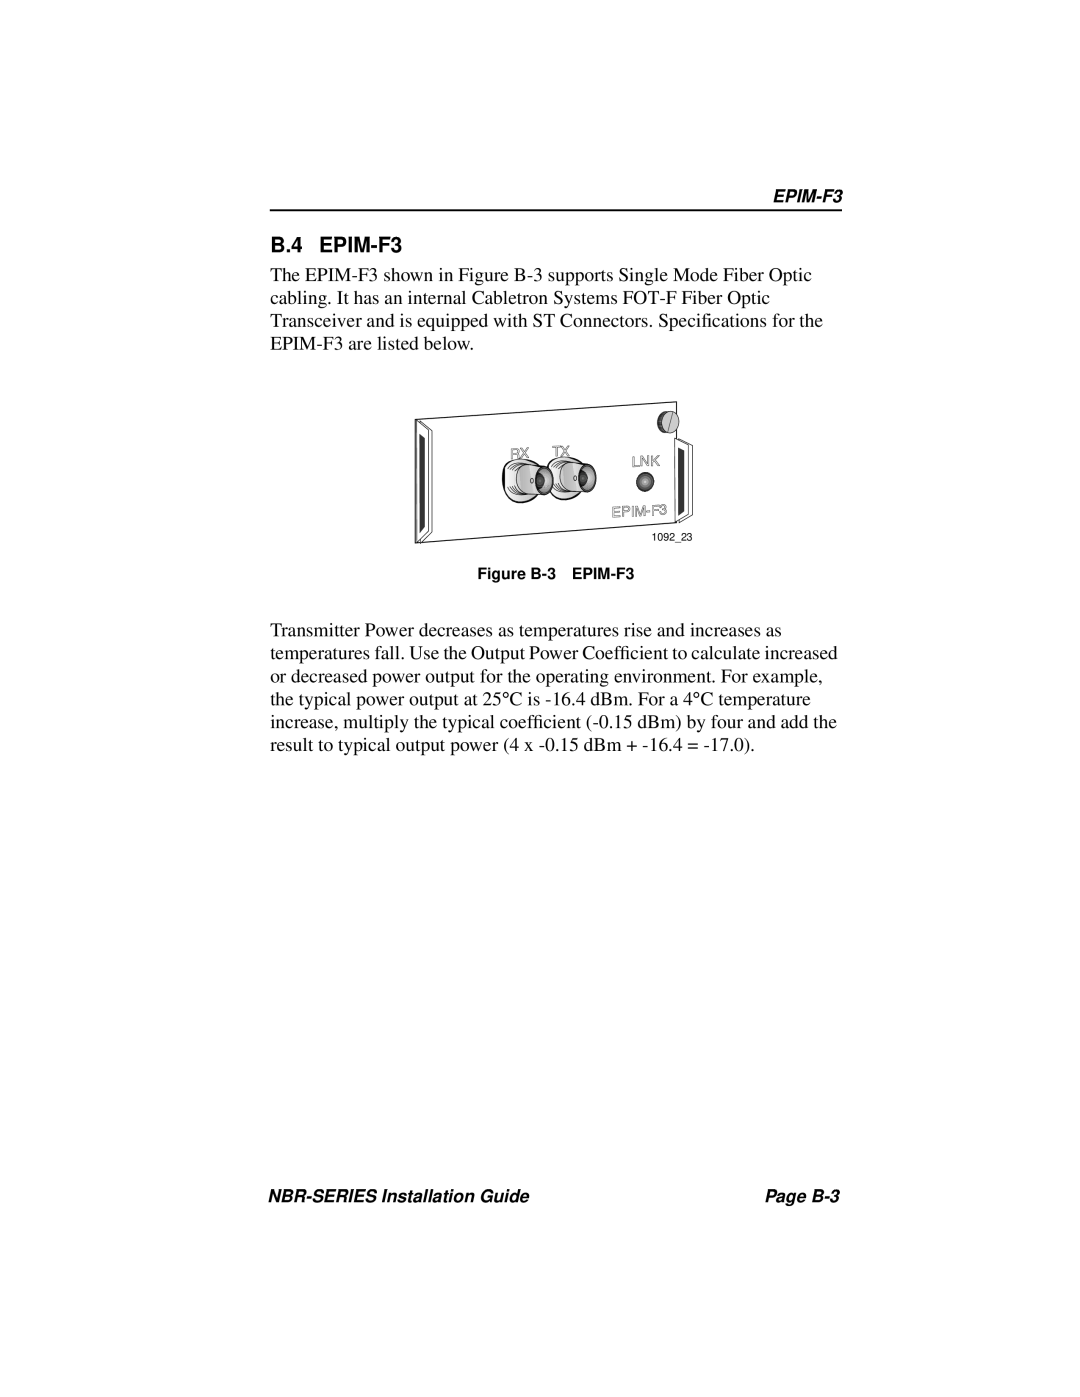 Cabletron Systems NBR-620, NBR-420, NBR-220 manual B.4 EPIM-F3, Figure B-3 EPIM-F3 